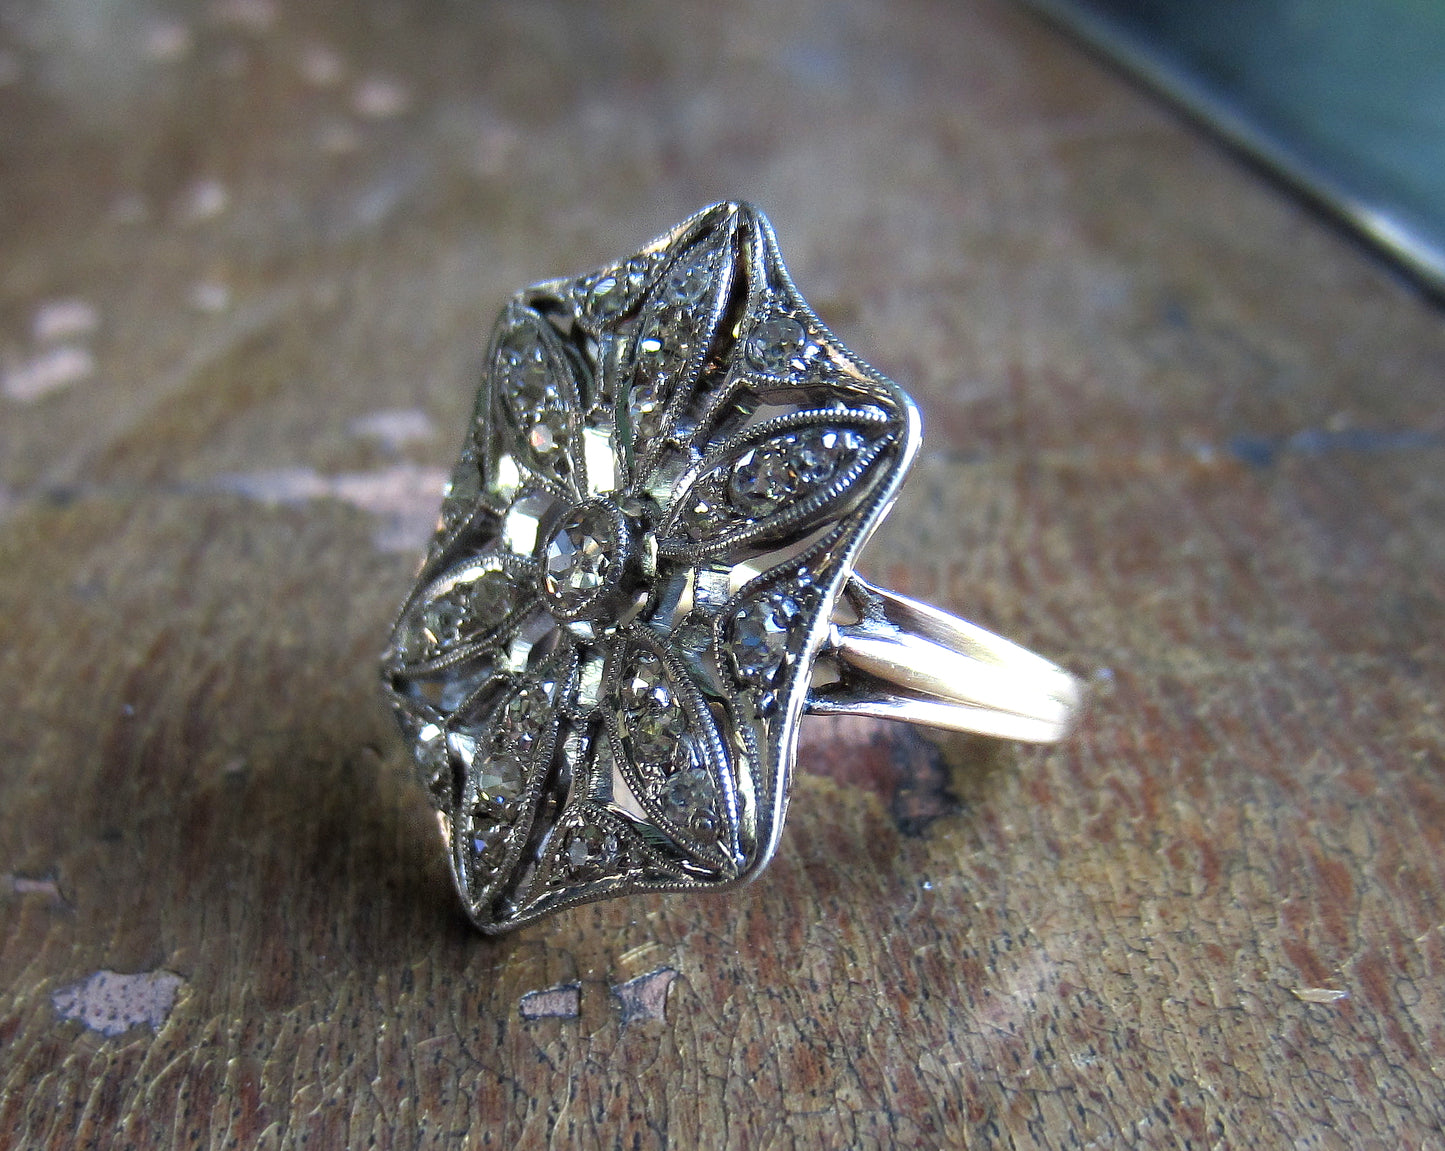 SOLD--Edwardian Old Mine Diamond Star Filigree Ring Plat/14k c. 1915